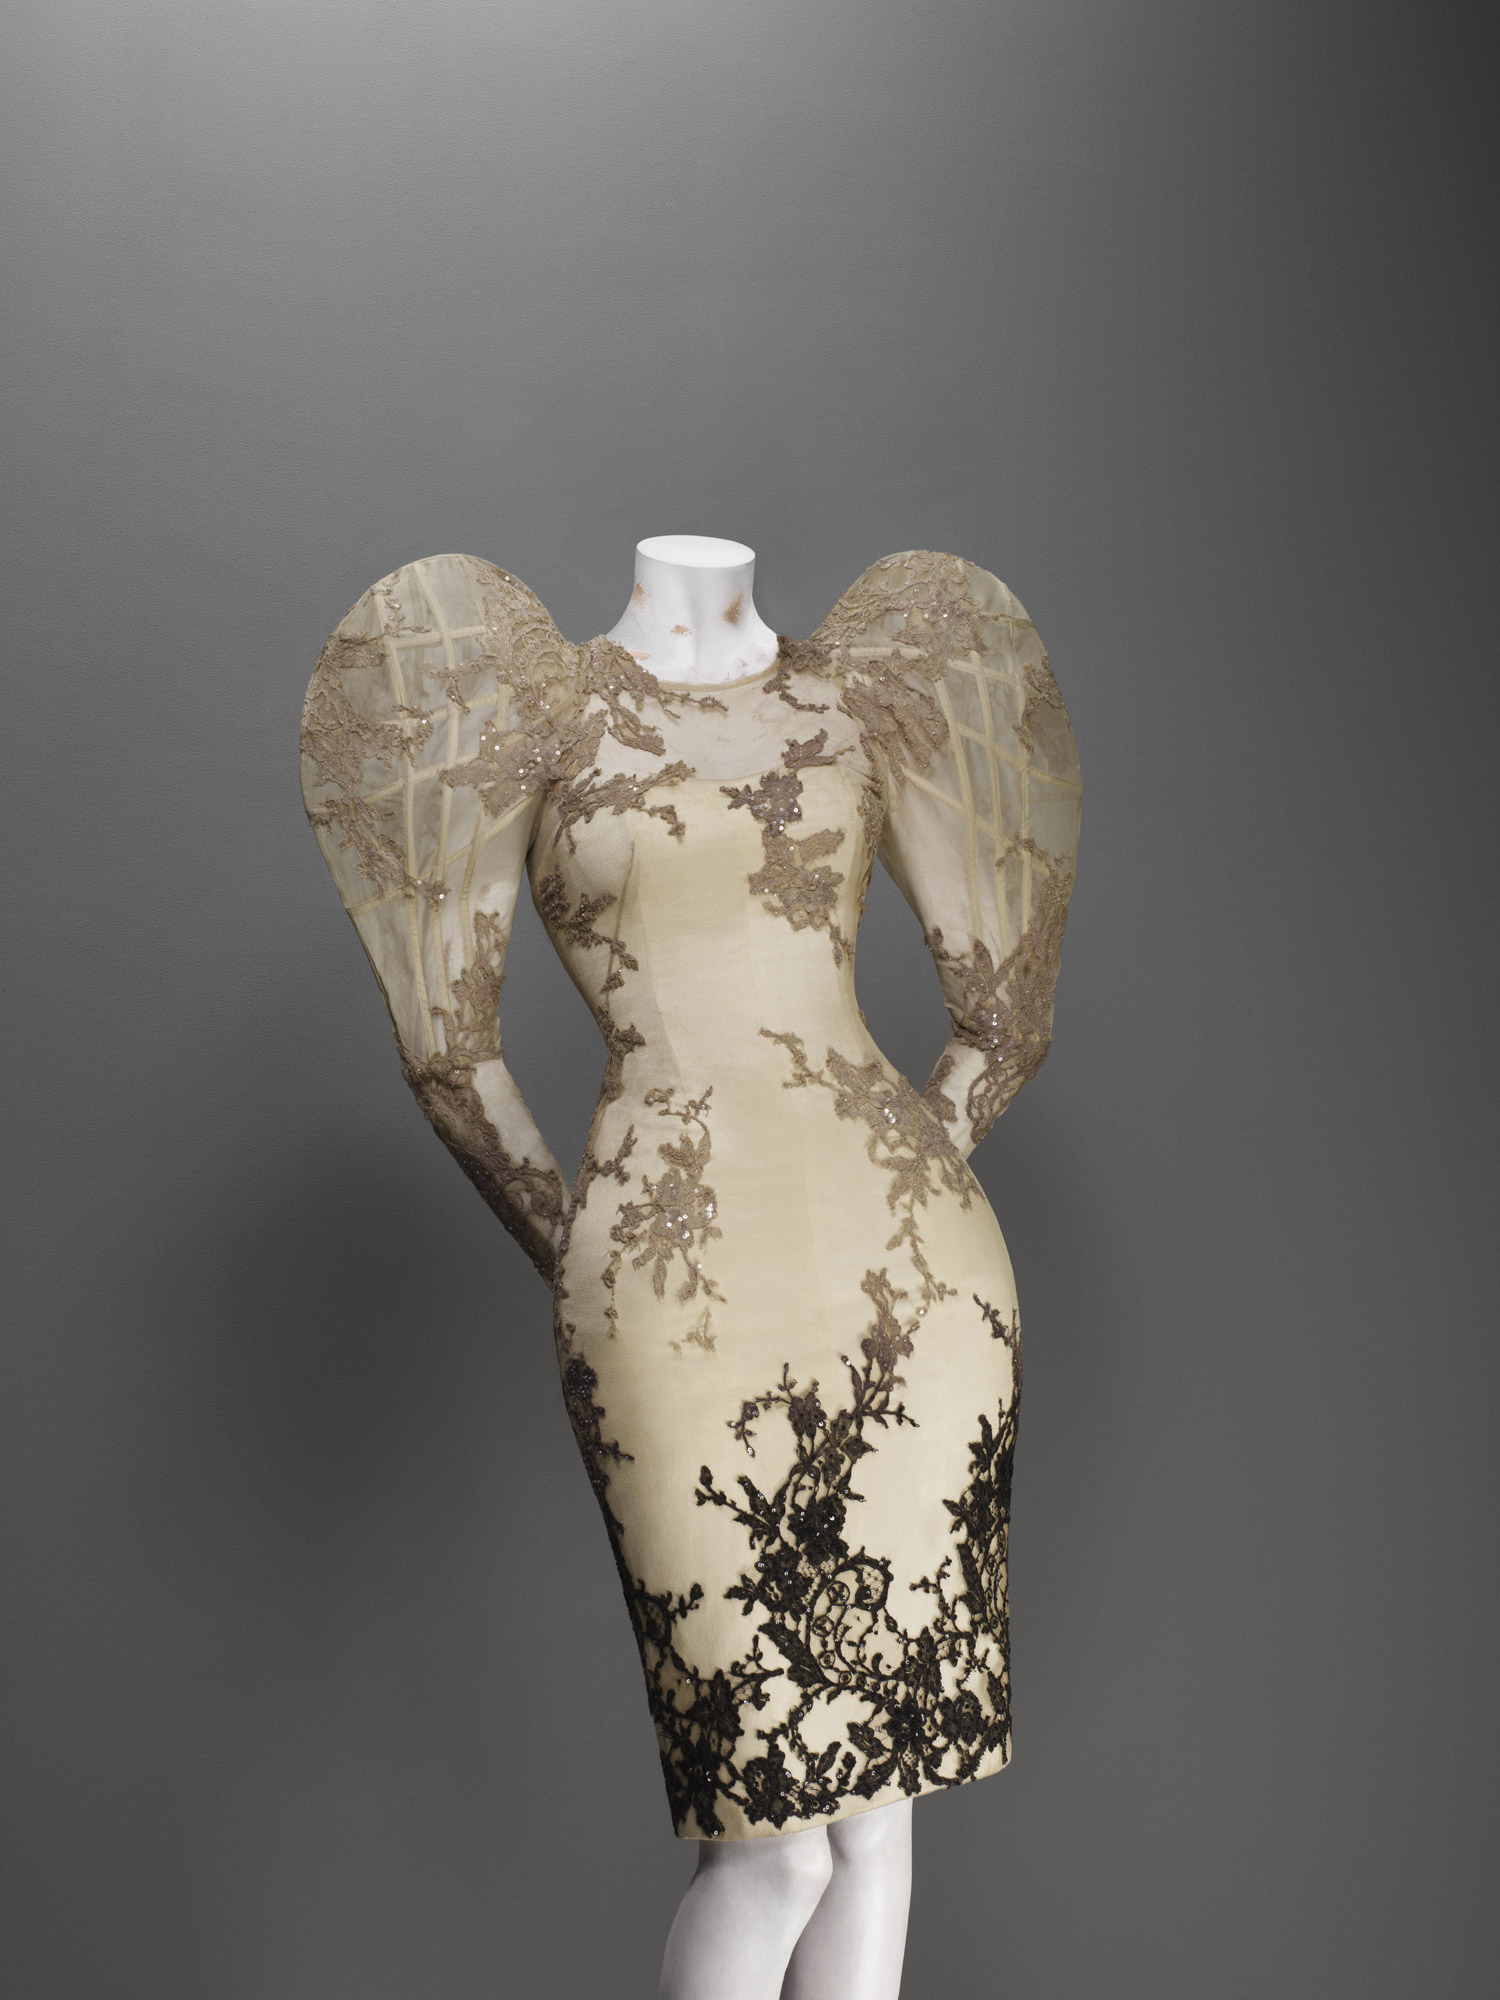 Alexander McQueen - A Sarabande lace dress worn with a black